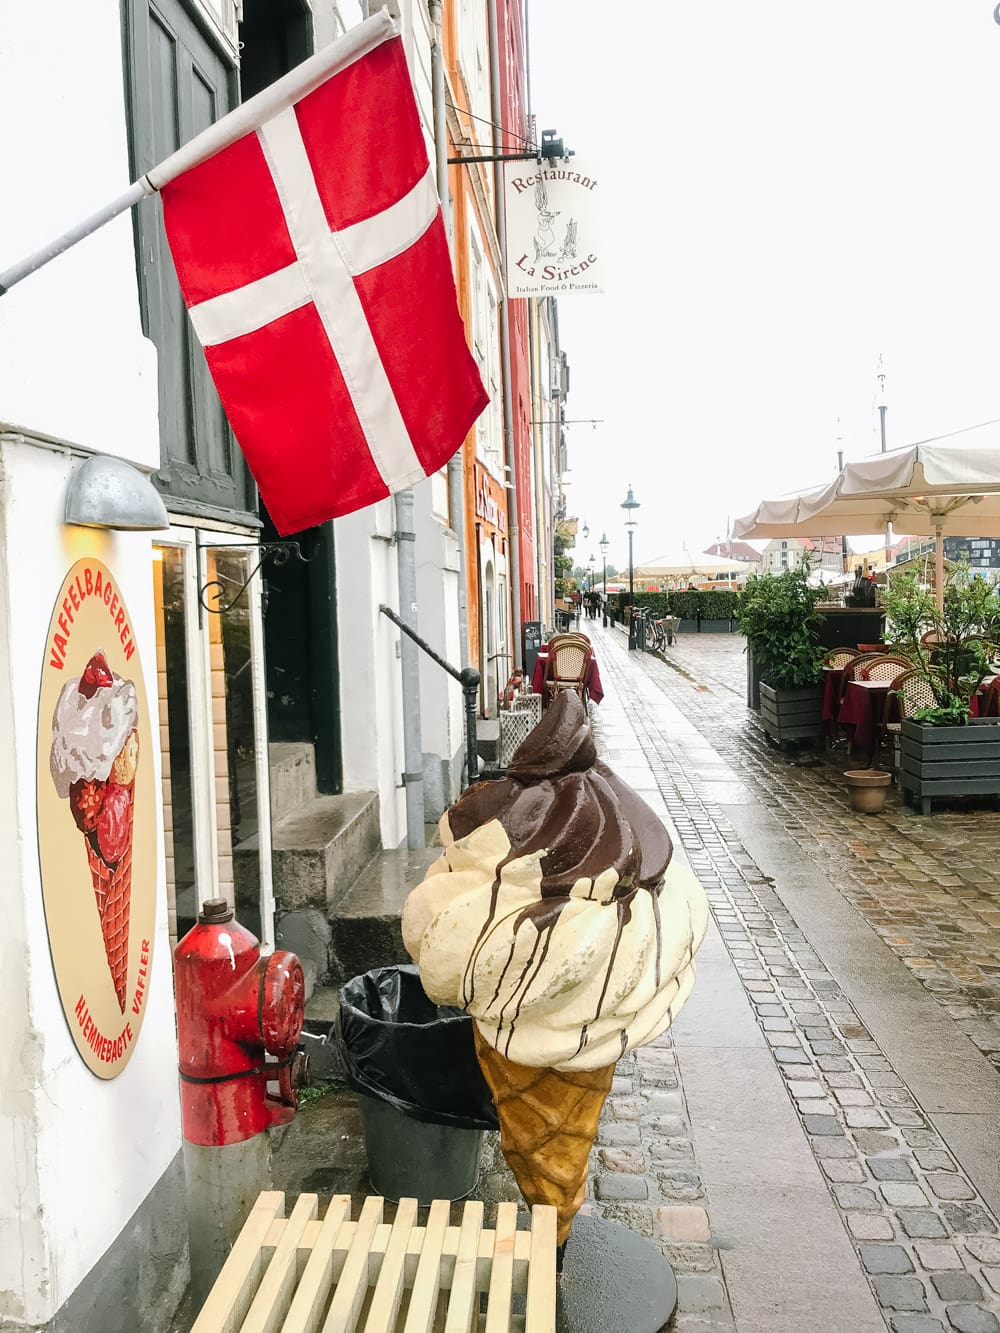 Vaffellbageren Ice Cream Shop